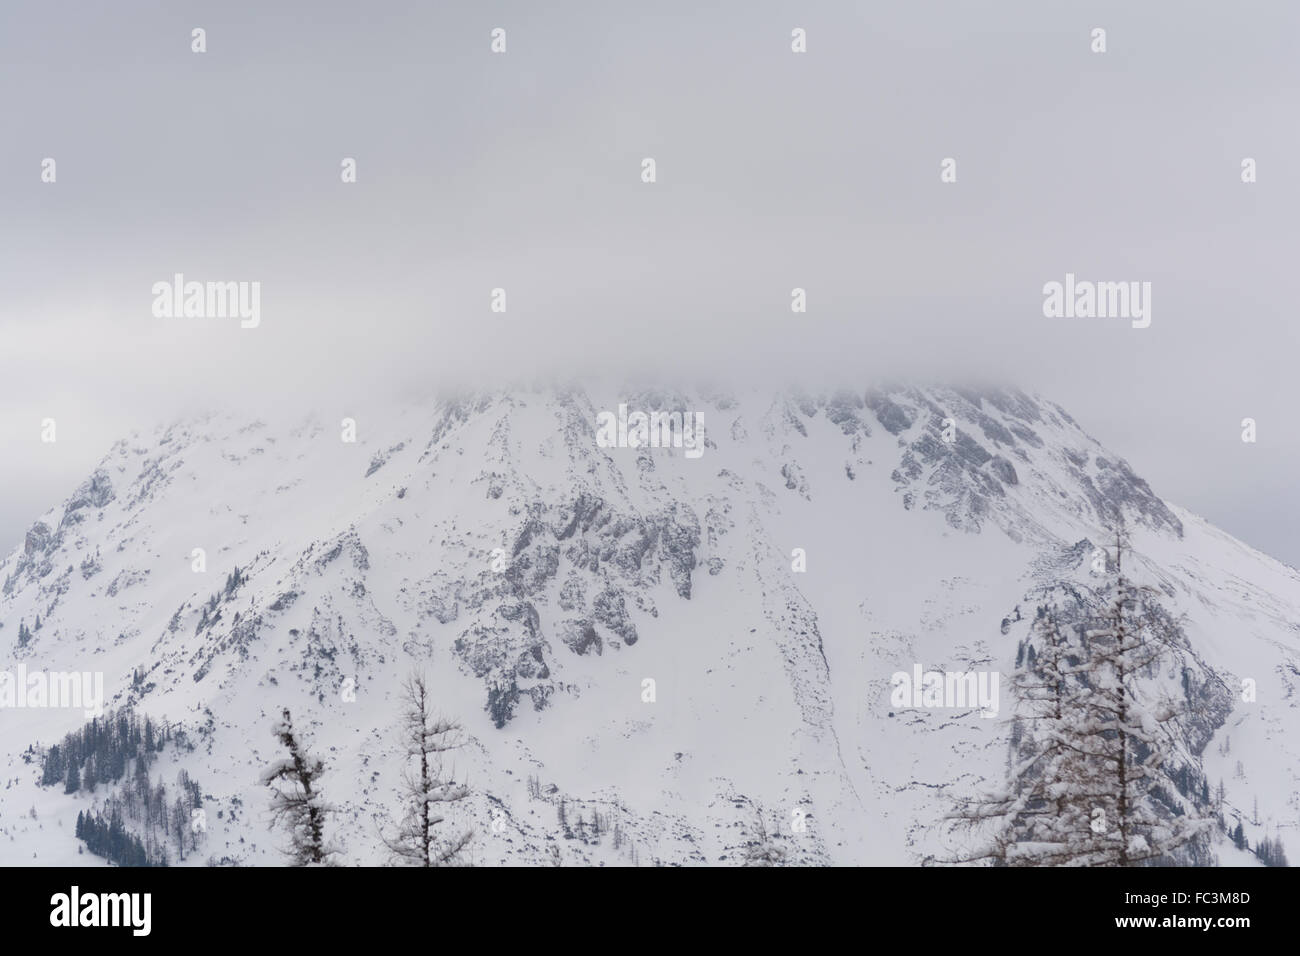 snowy mountain peaks shrouded in mist has Stock Photo